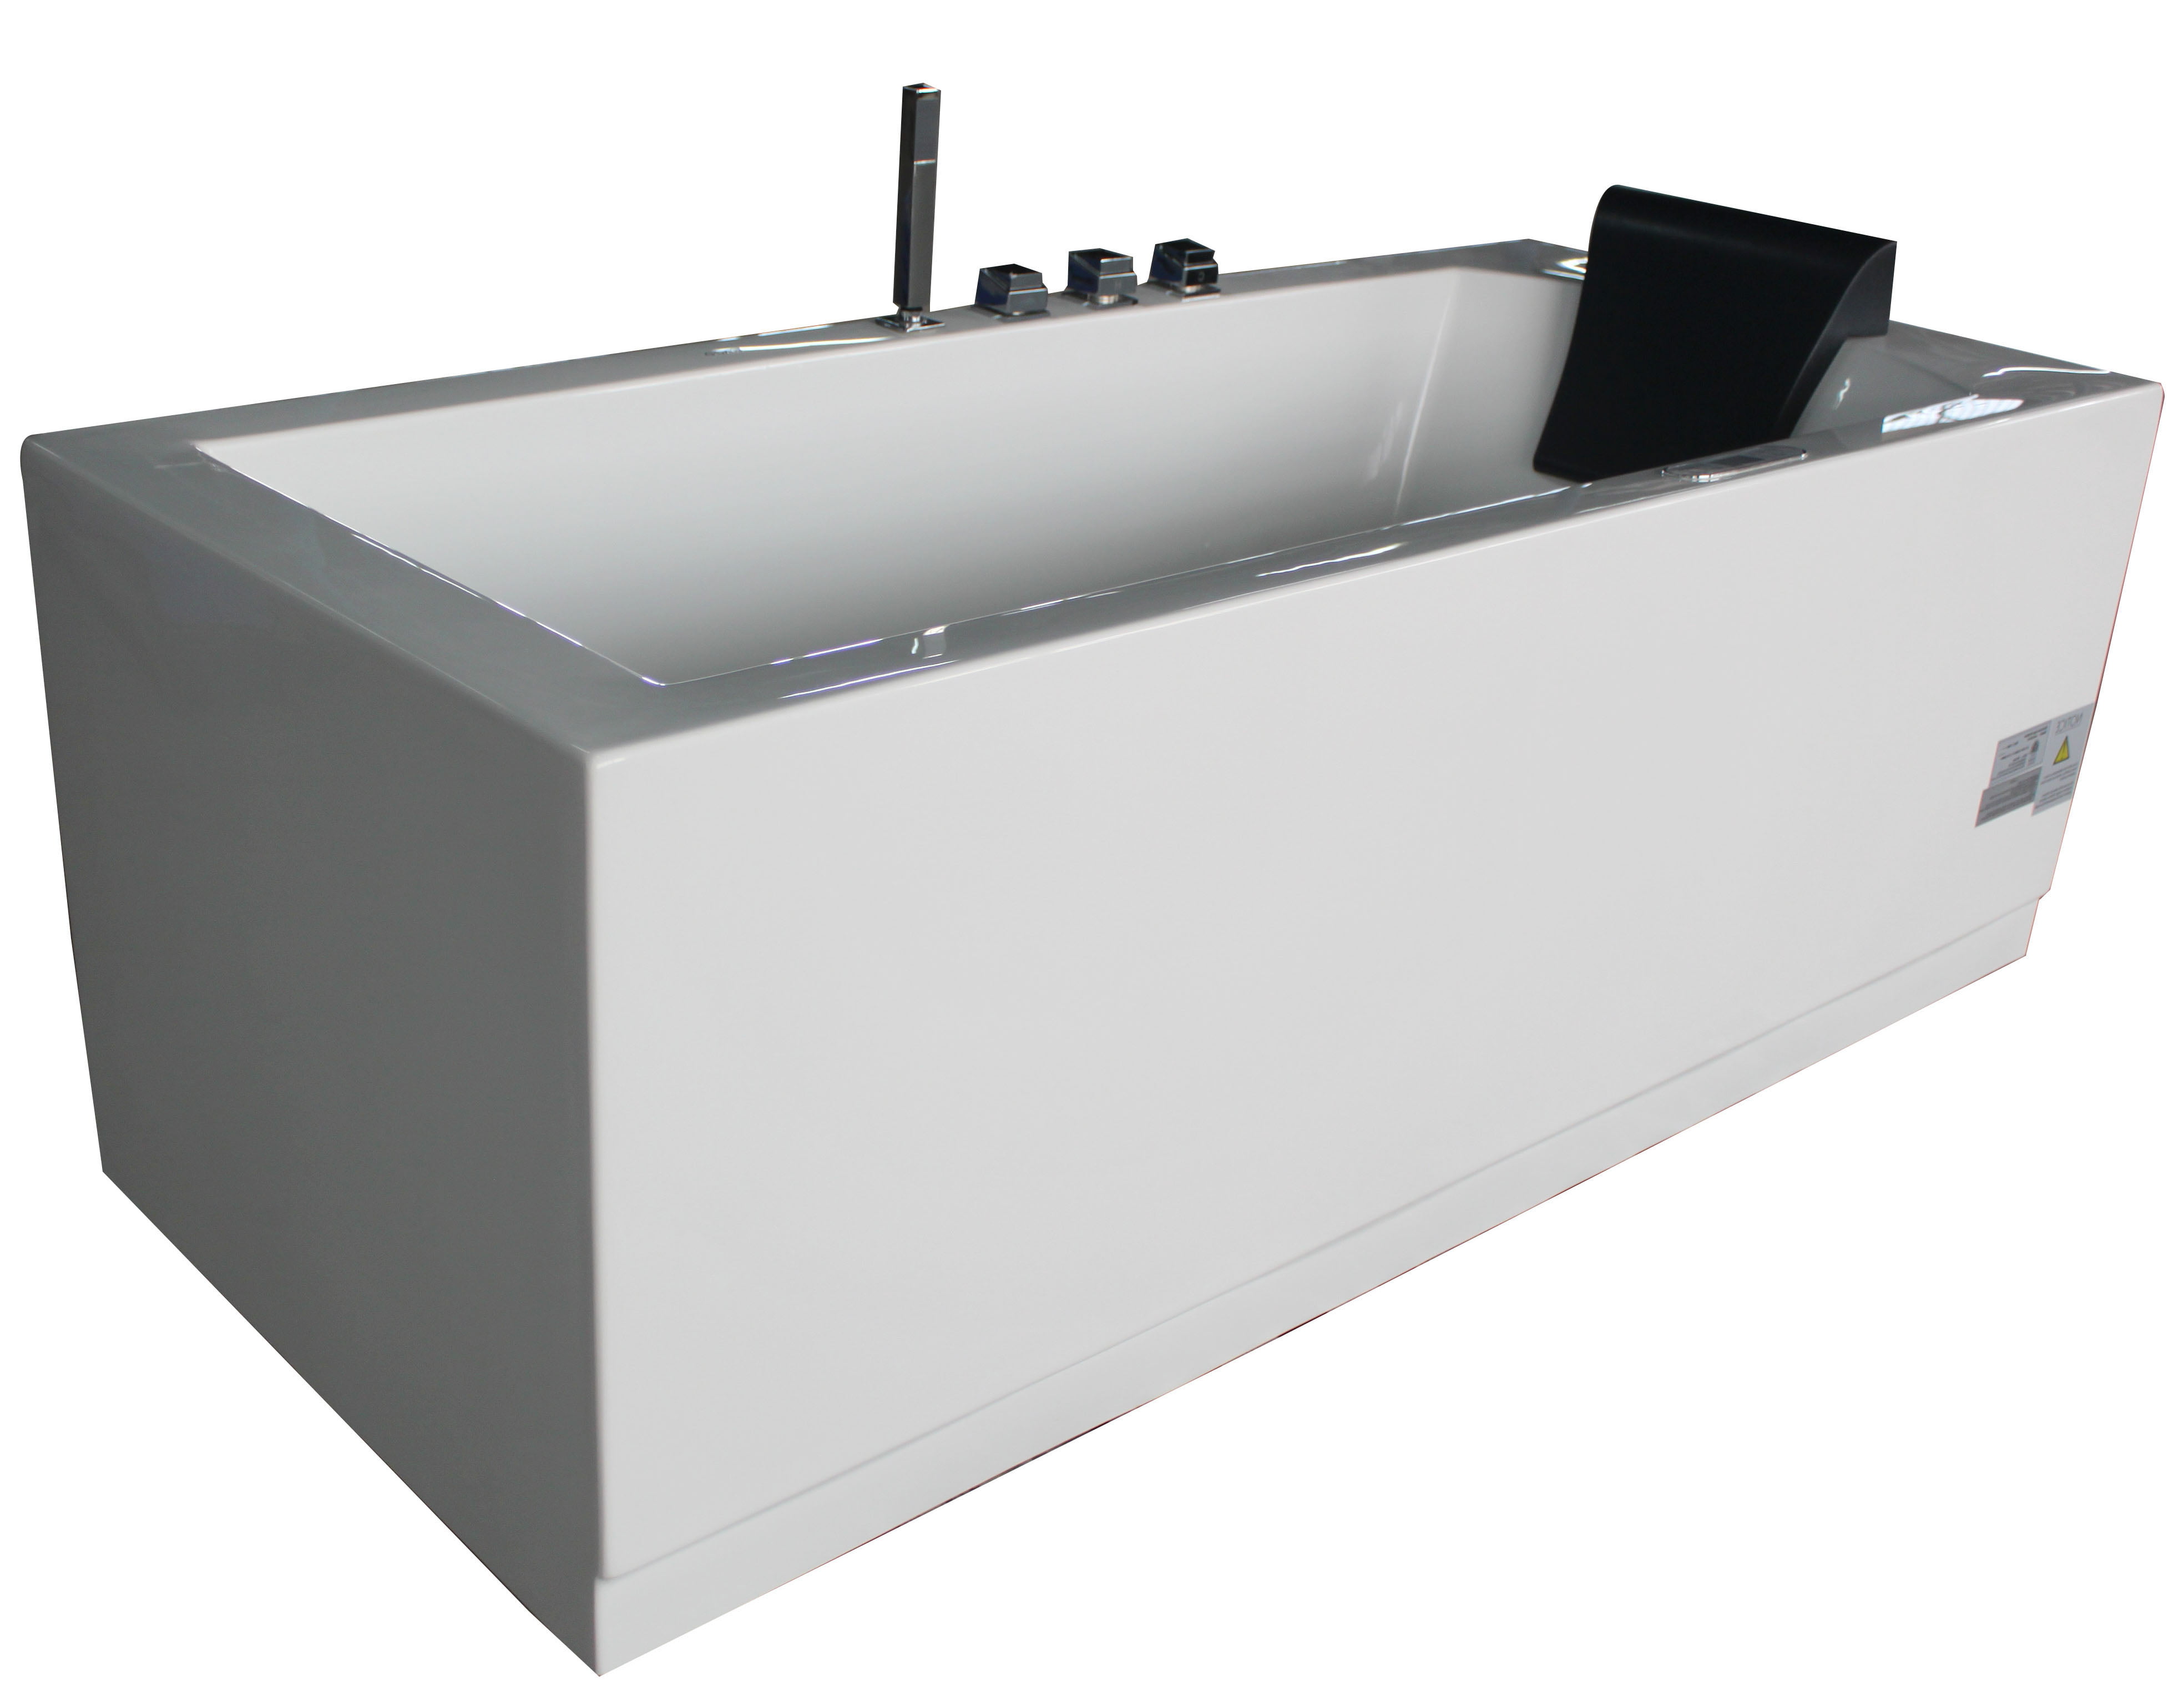 Am154etl-l6 6 Ft. Acrylic White Rectangular Whirlpool Tub With Fixtures - Left